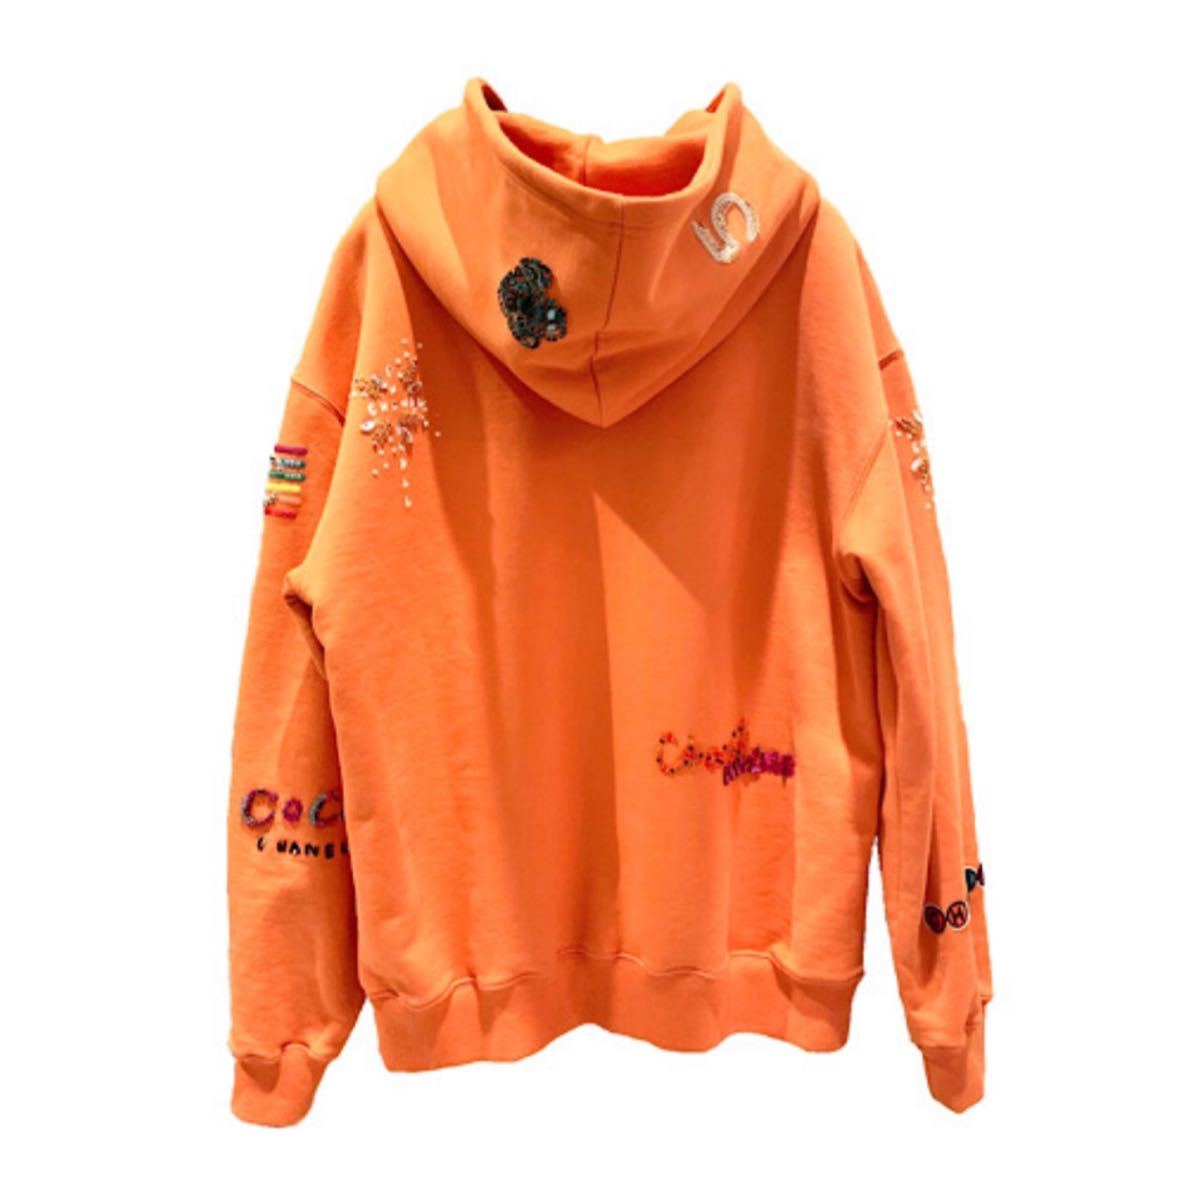 [ хранение не использовался товар ] CHANEL × Pharrell Williams Chanel fareru Williams сотрудничество Parker Capsule коллекция orange для мужчин и женщин 